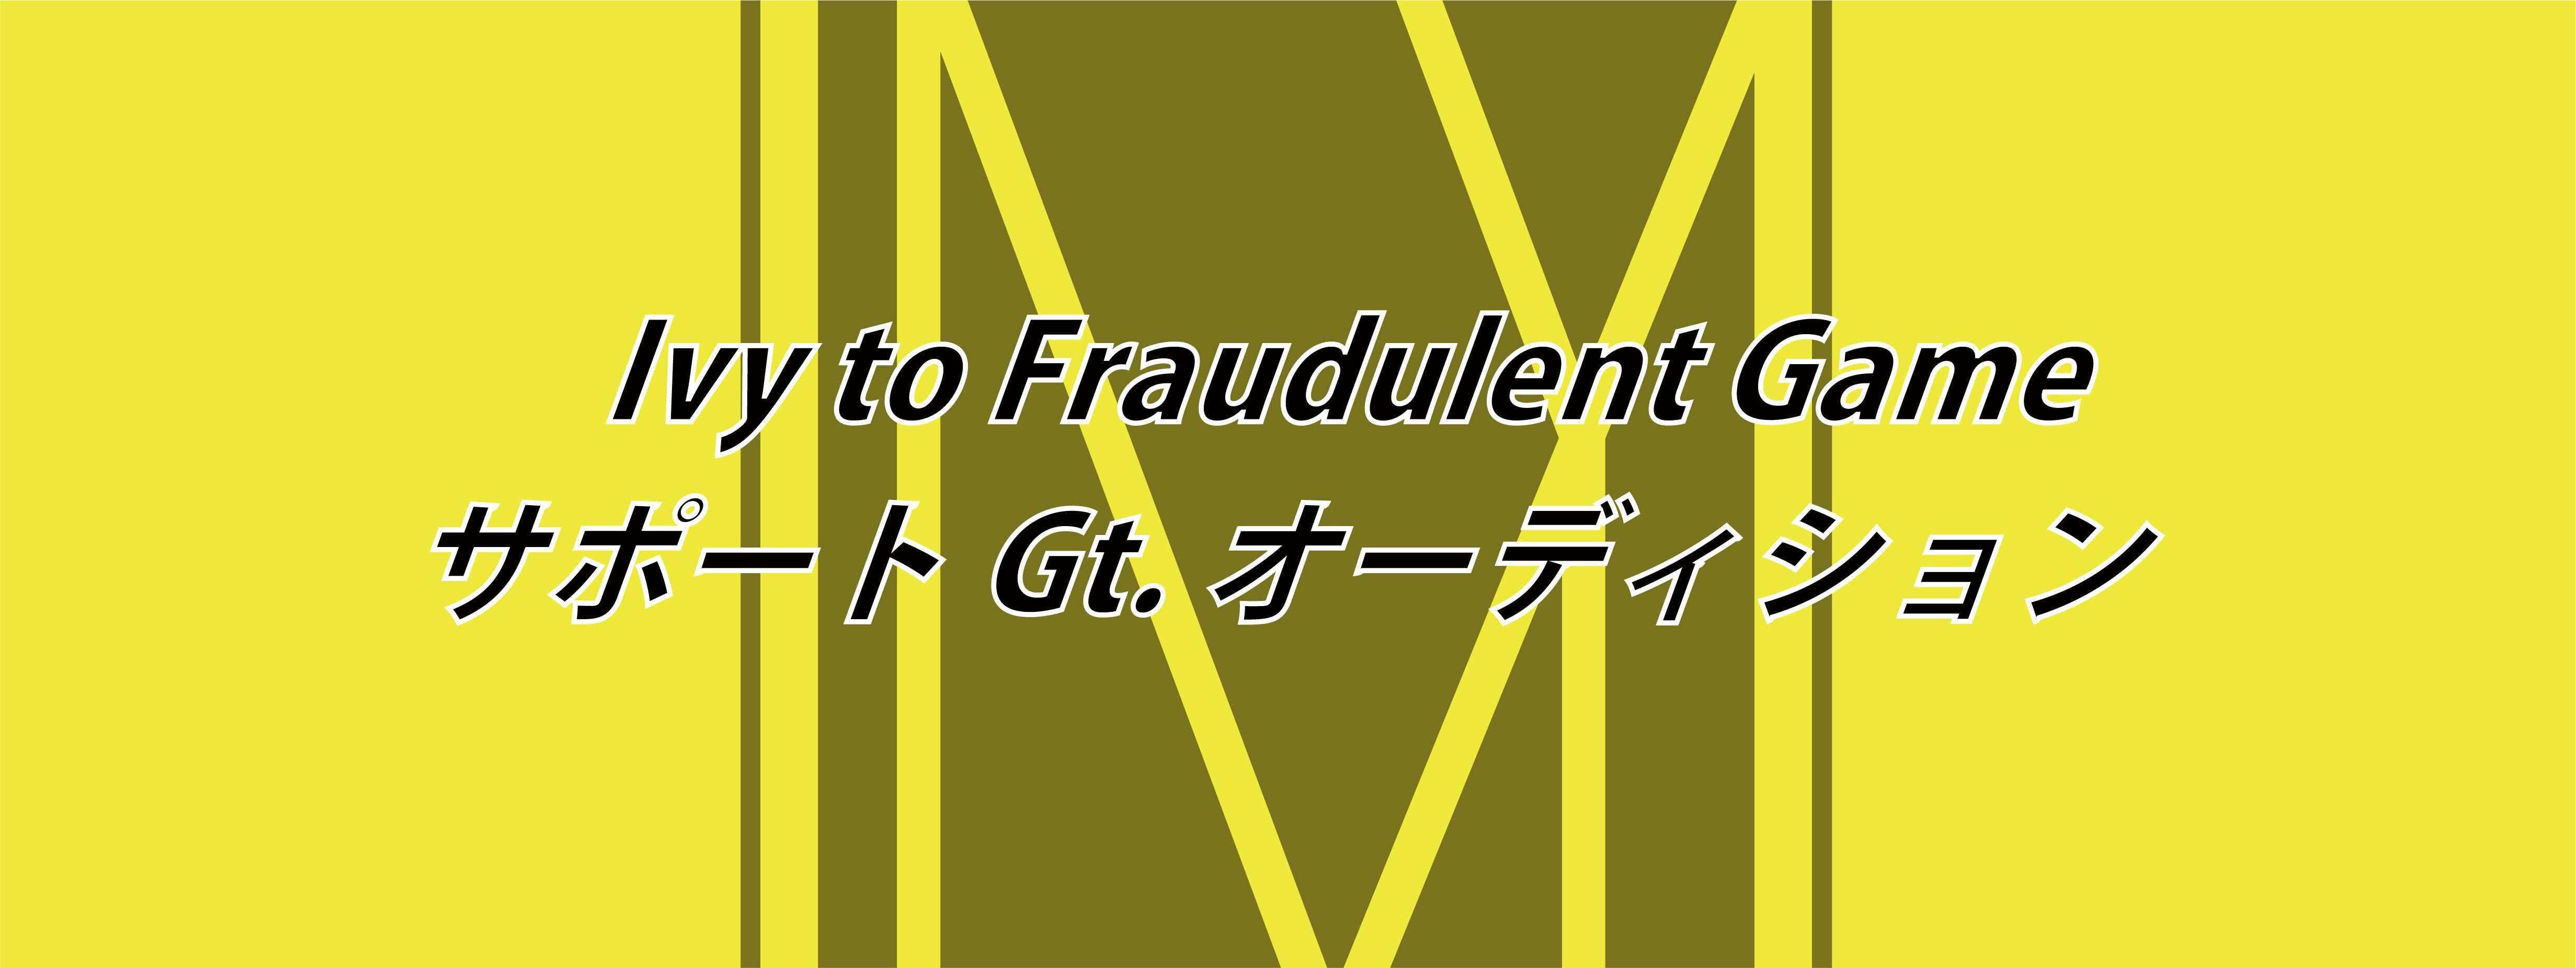 Ivy to Fraudulent GameサポートGt.オーディション